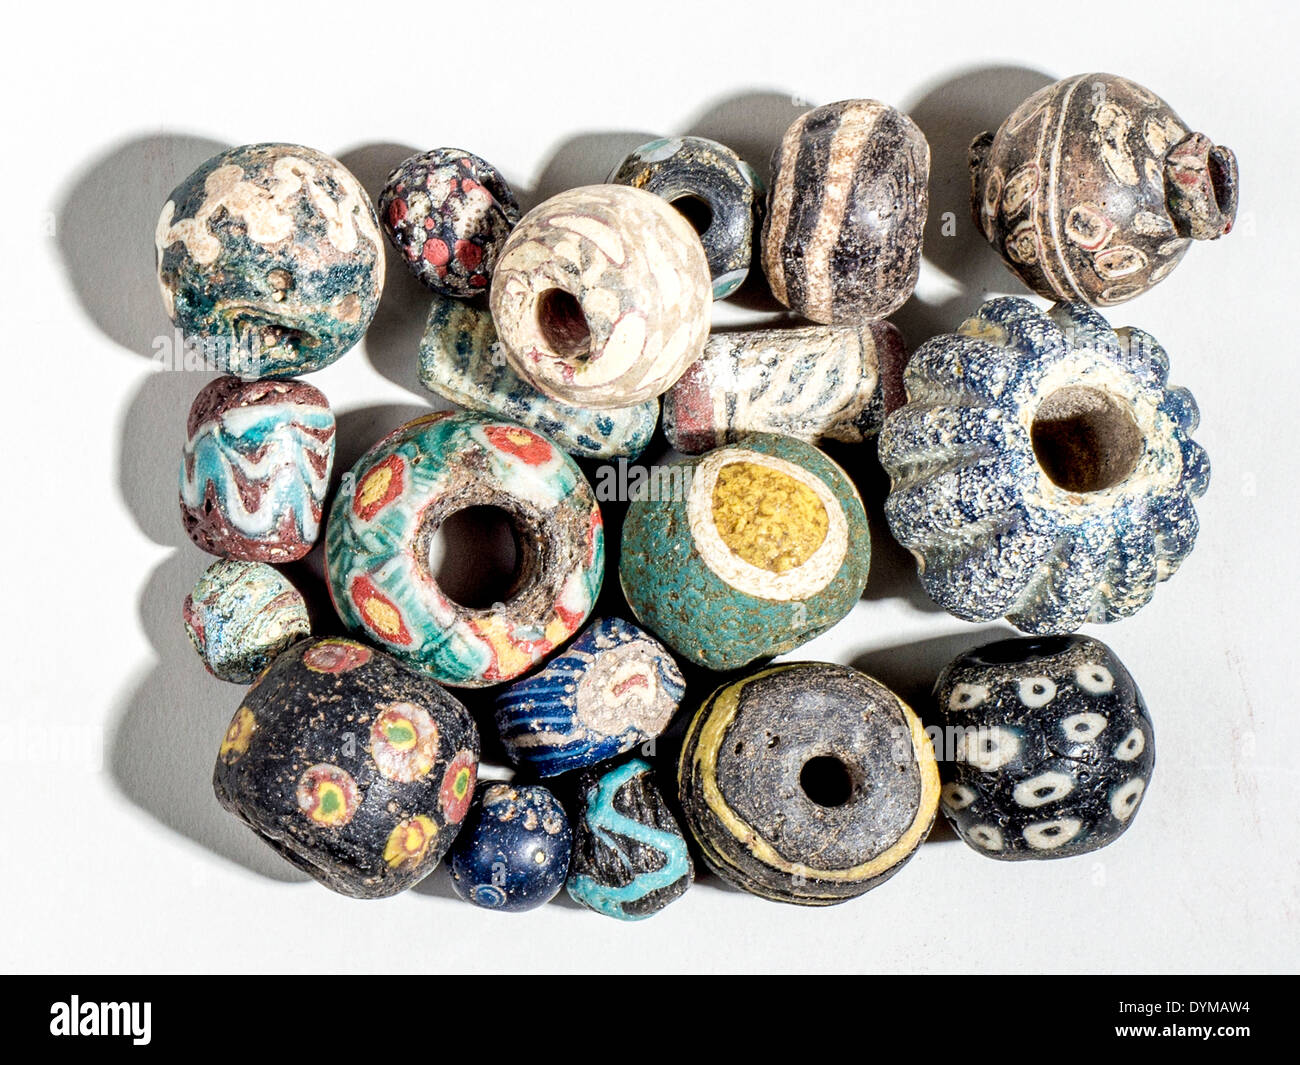 Islamic Glass Beads. 10Th century CE. On White Background Stock Photo